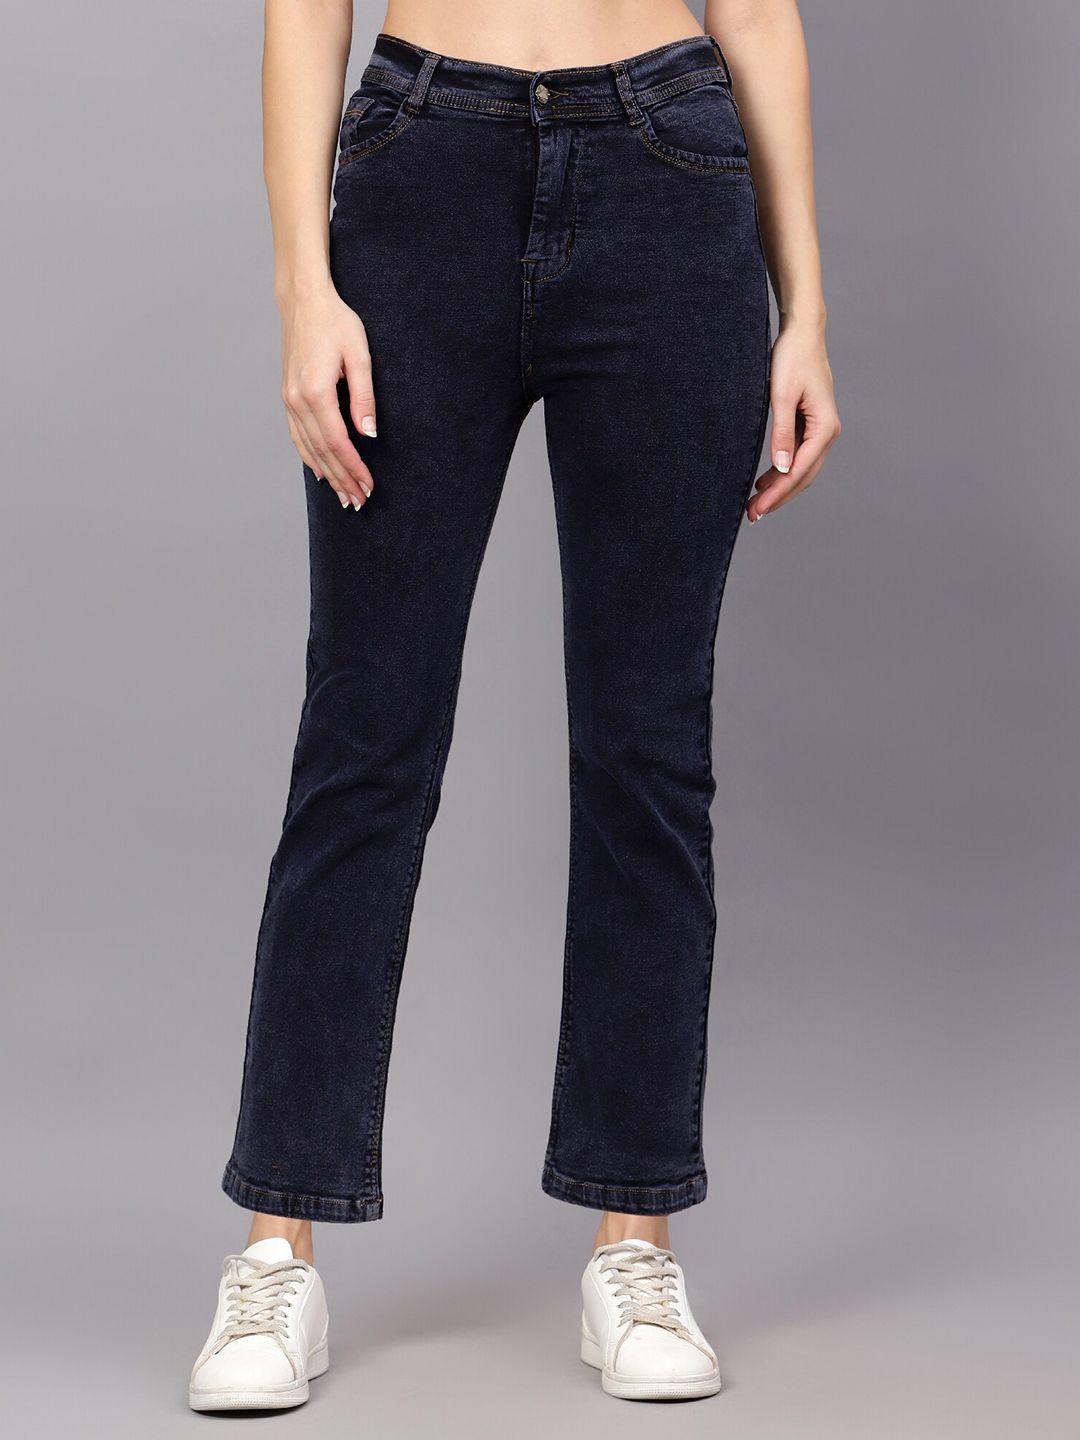 tyffyn women navy blue jean slim fit high-rise cotton jeans